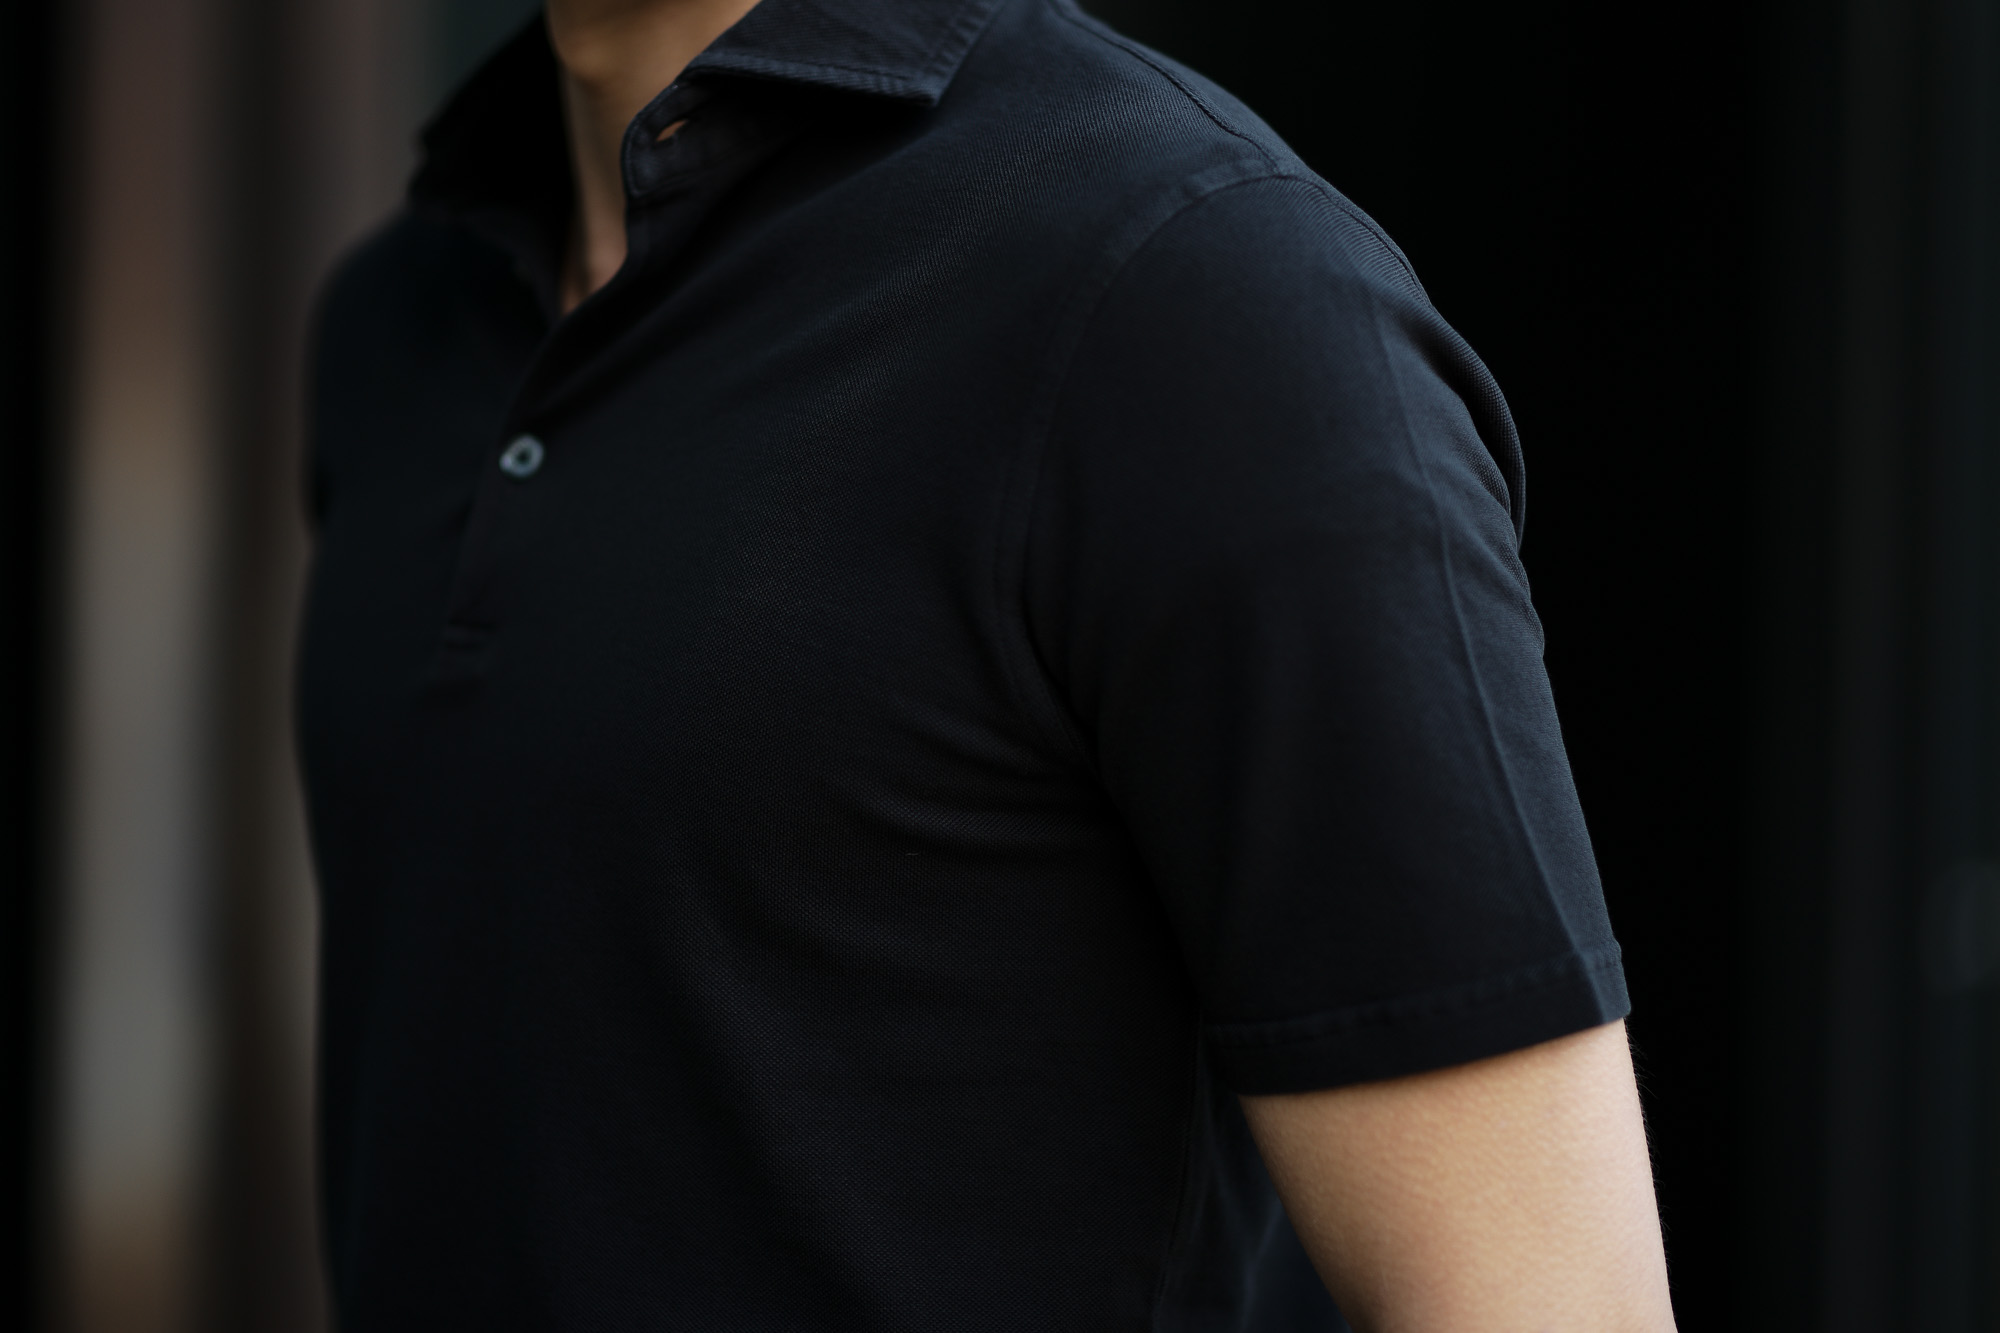 FEDELI(フェデーリ) Piquet Polo Shirt (ピケ ポロシャツ) カノコ ポロシャツ BLACK (ブラック・36) made in italy (イタリア製)2020 春夏新作 愛知 名古屋 altoediritto アルトエデリット ポロ